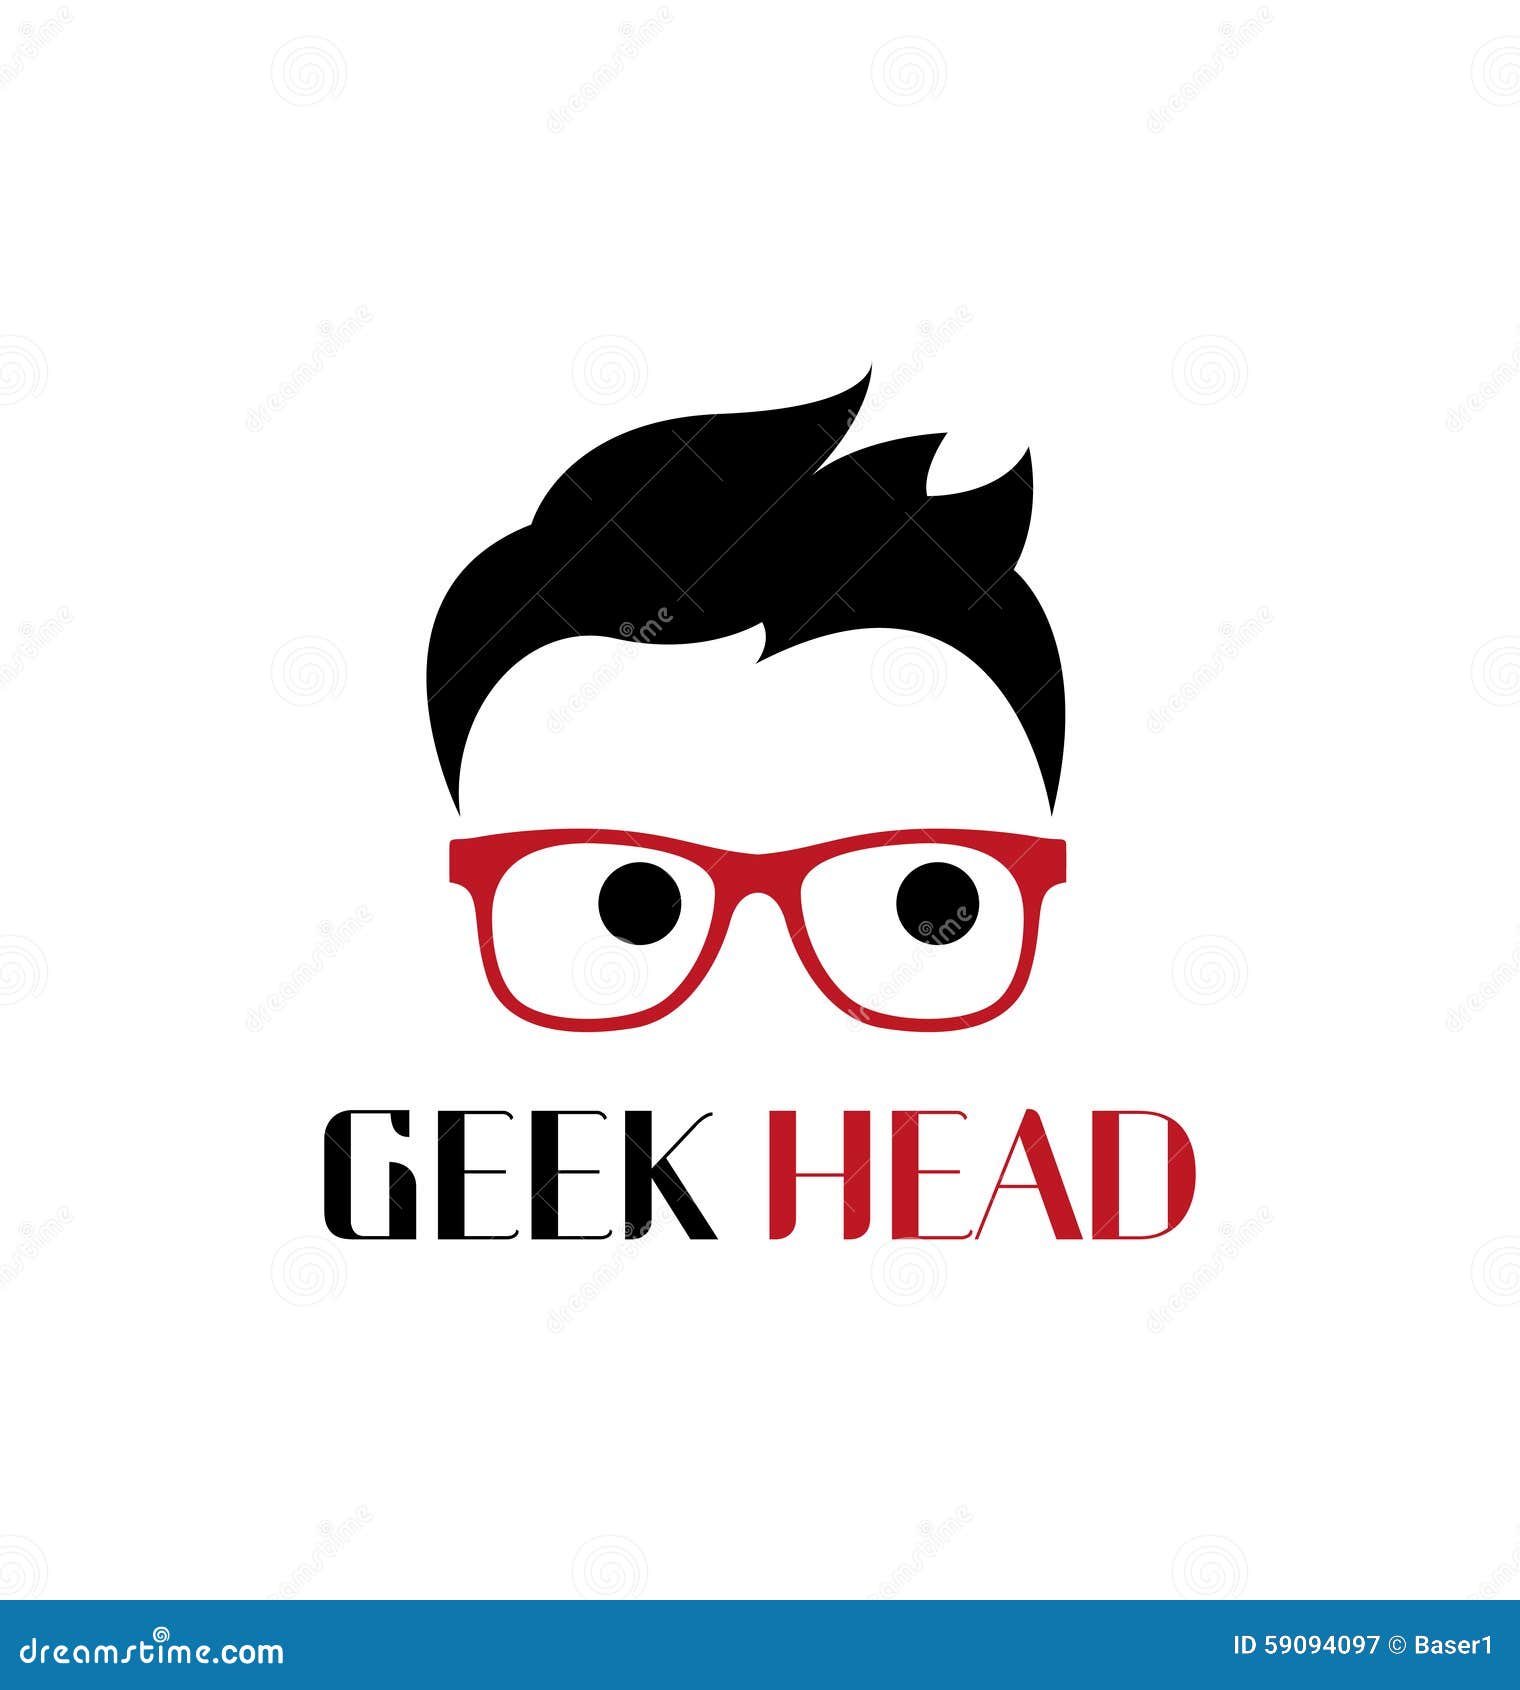 geek head logo template